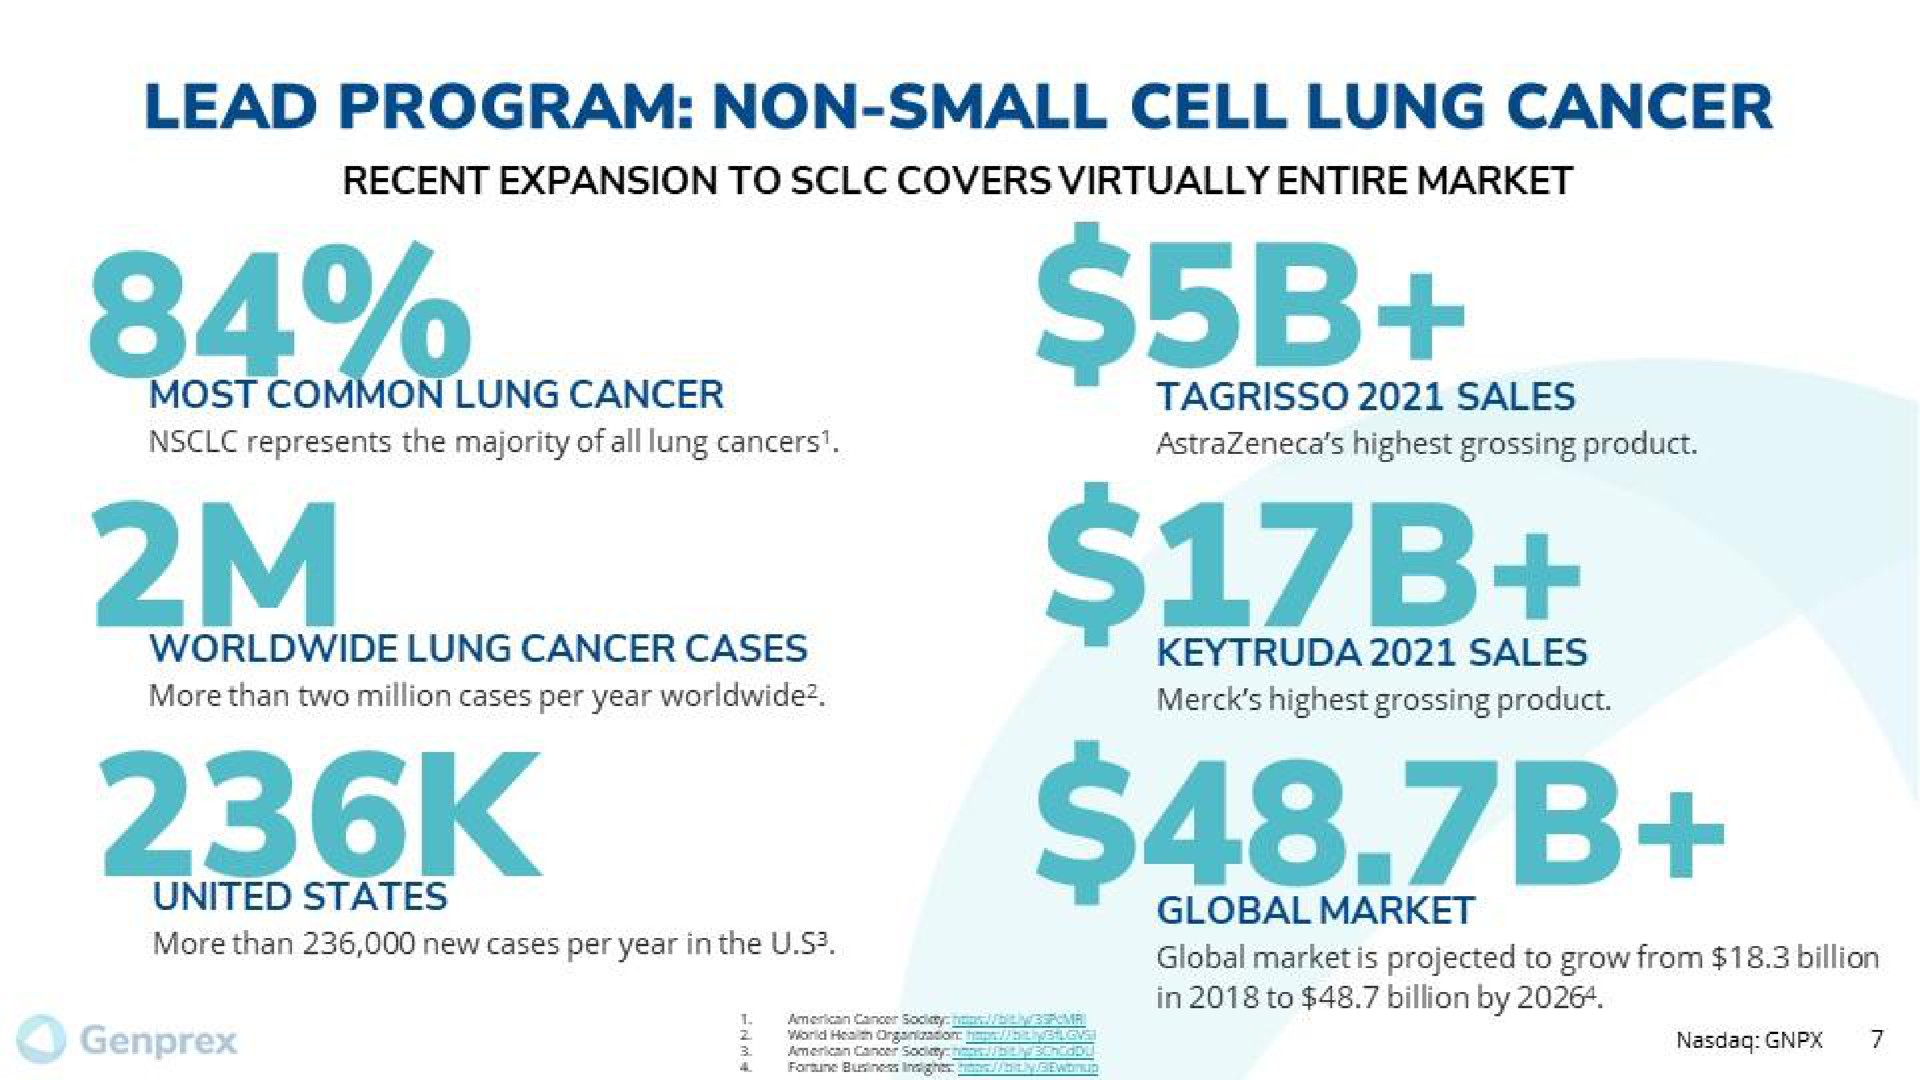 lead program non small cell lung cancer | Genprex